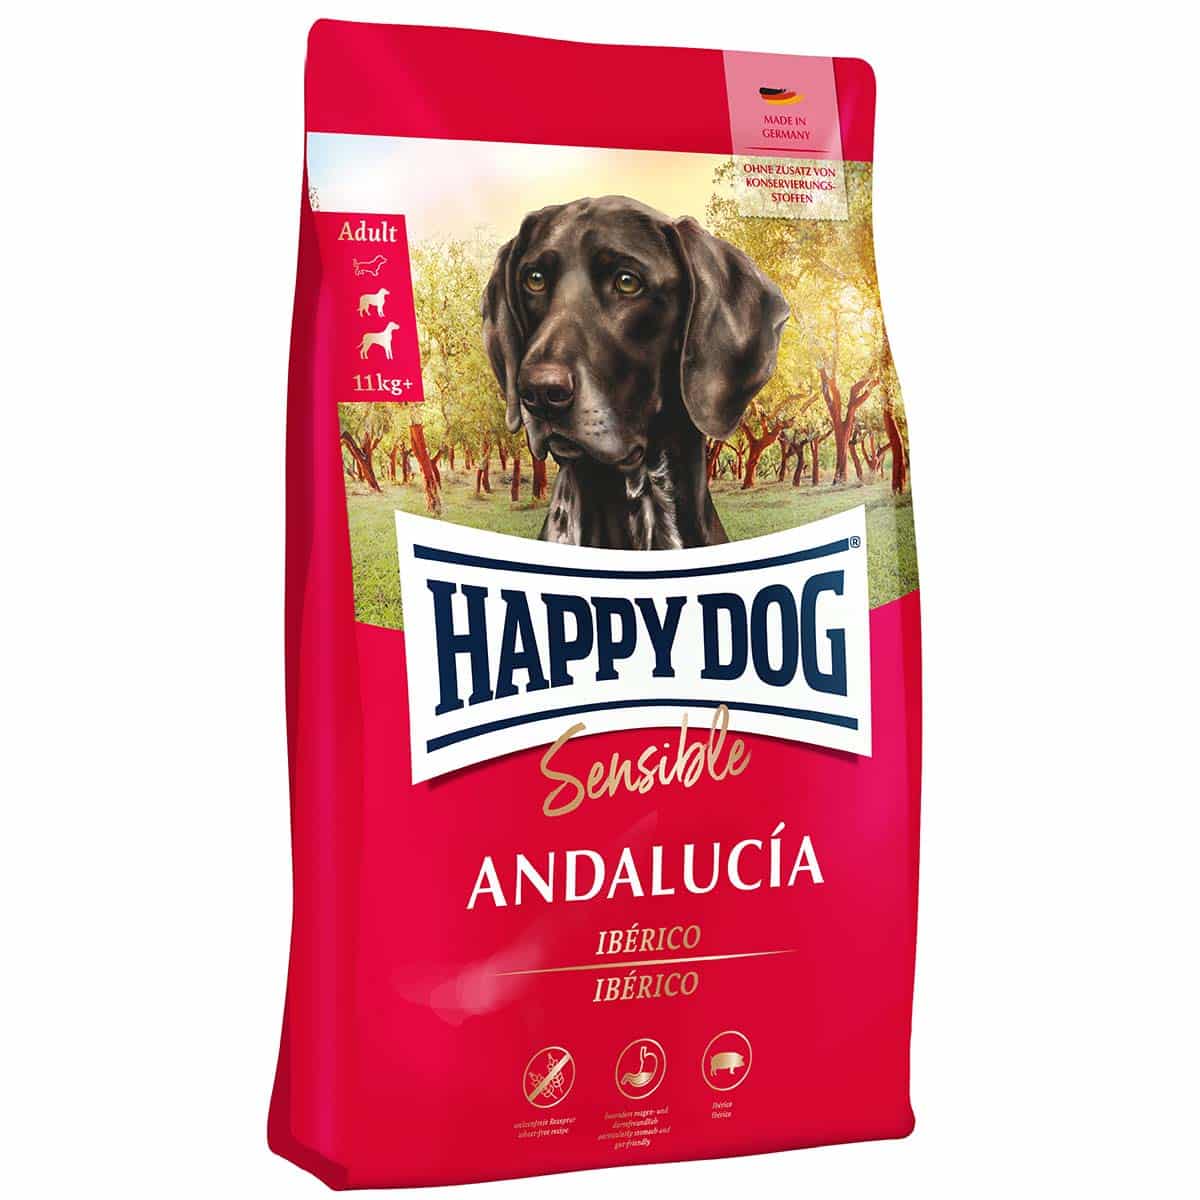 Happy Dog Supreme Sensible Andalucía 2x11kg